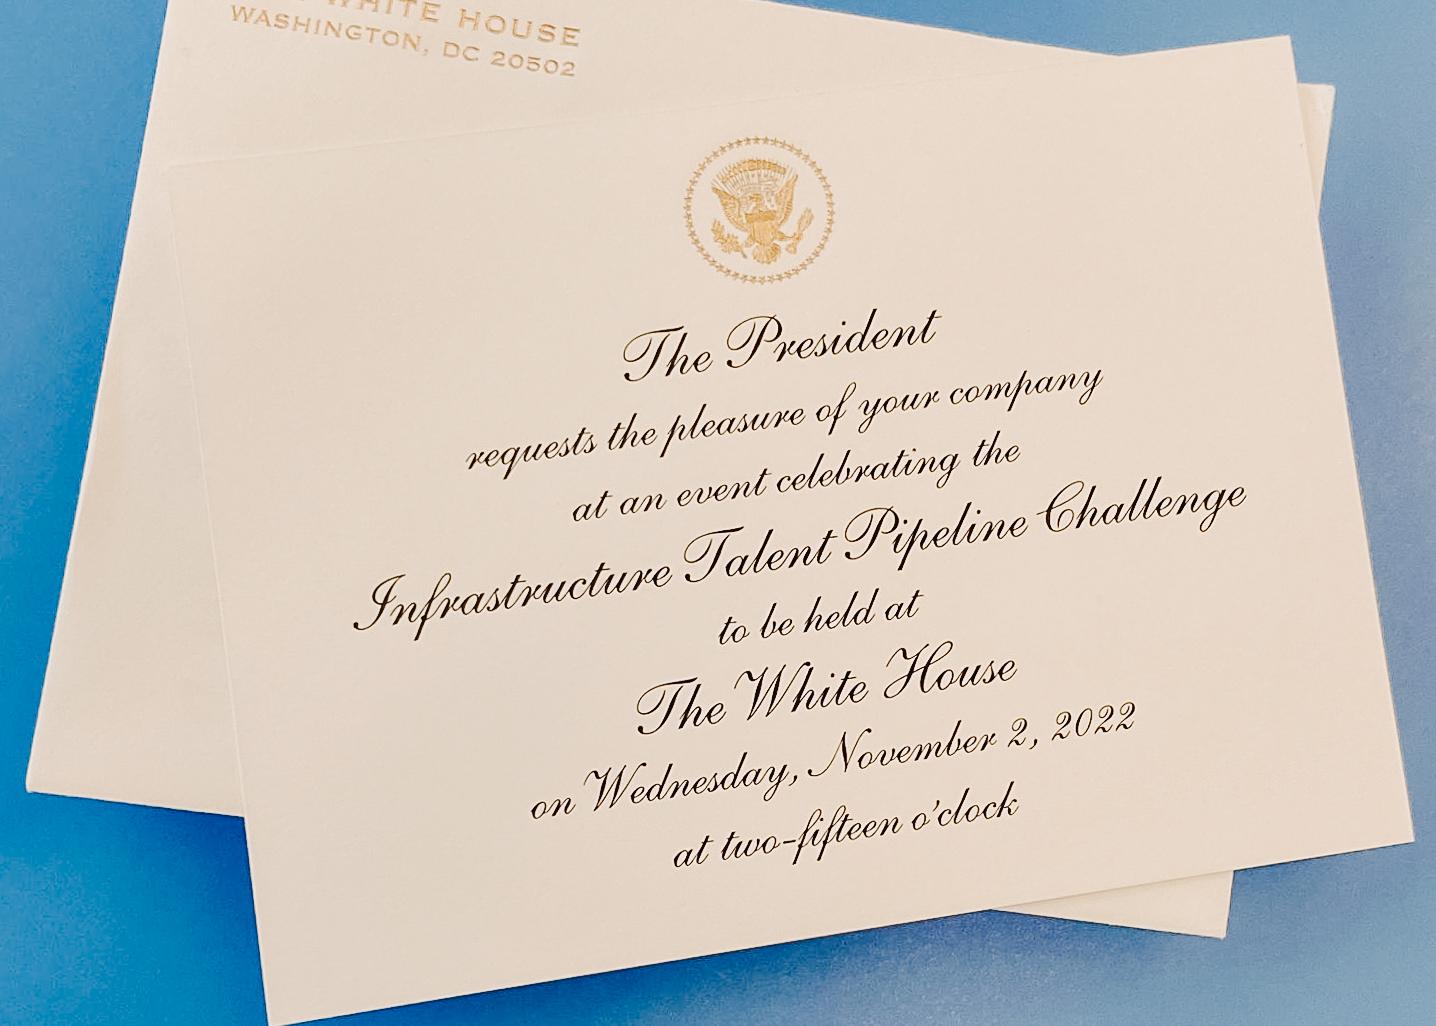 President obama's invitation to the white house.